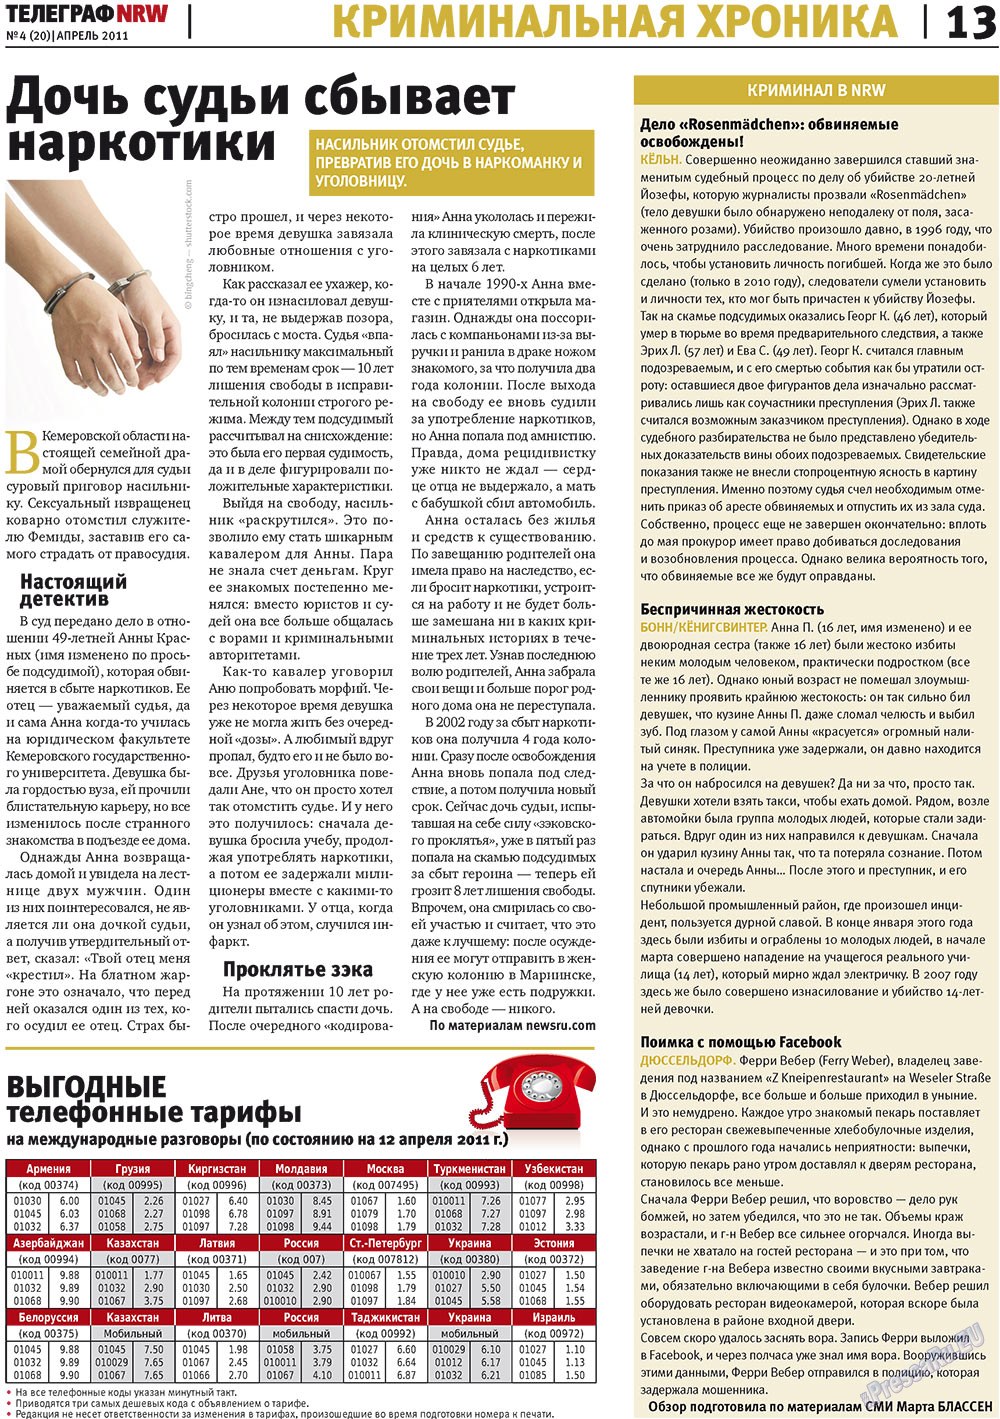 Телеграф NRW, газета. 2011 №4 стр.13